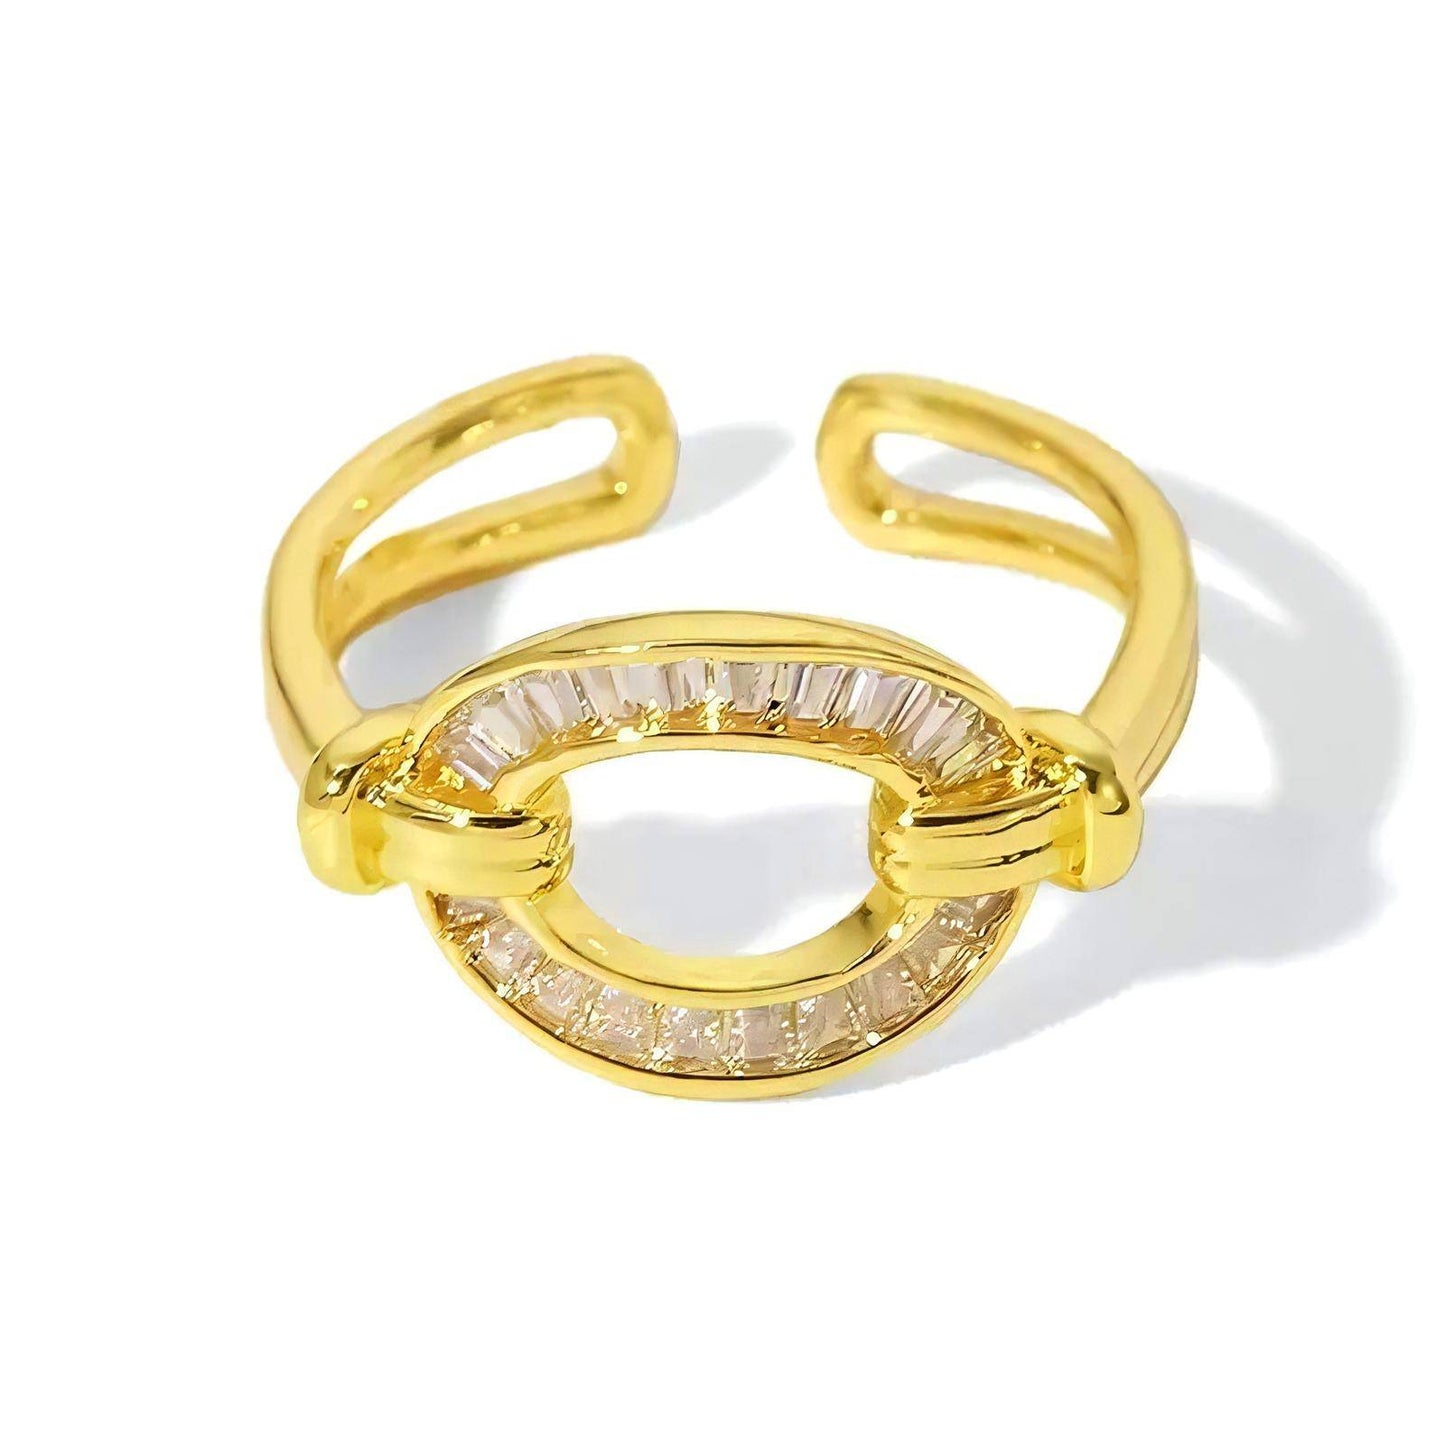 Gold tone finger ring